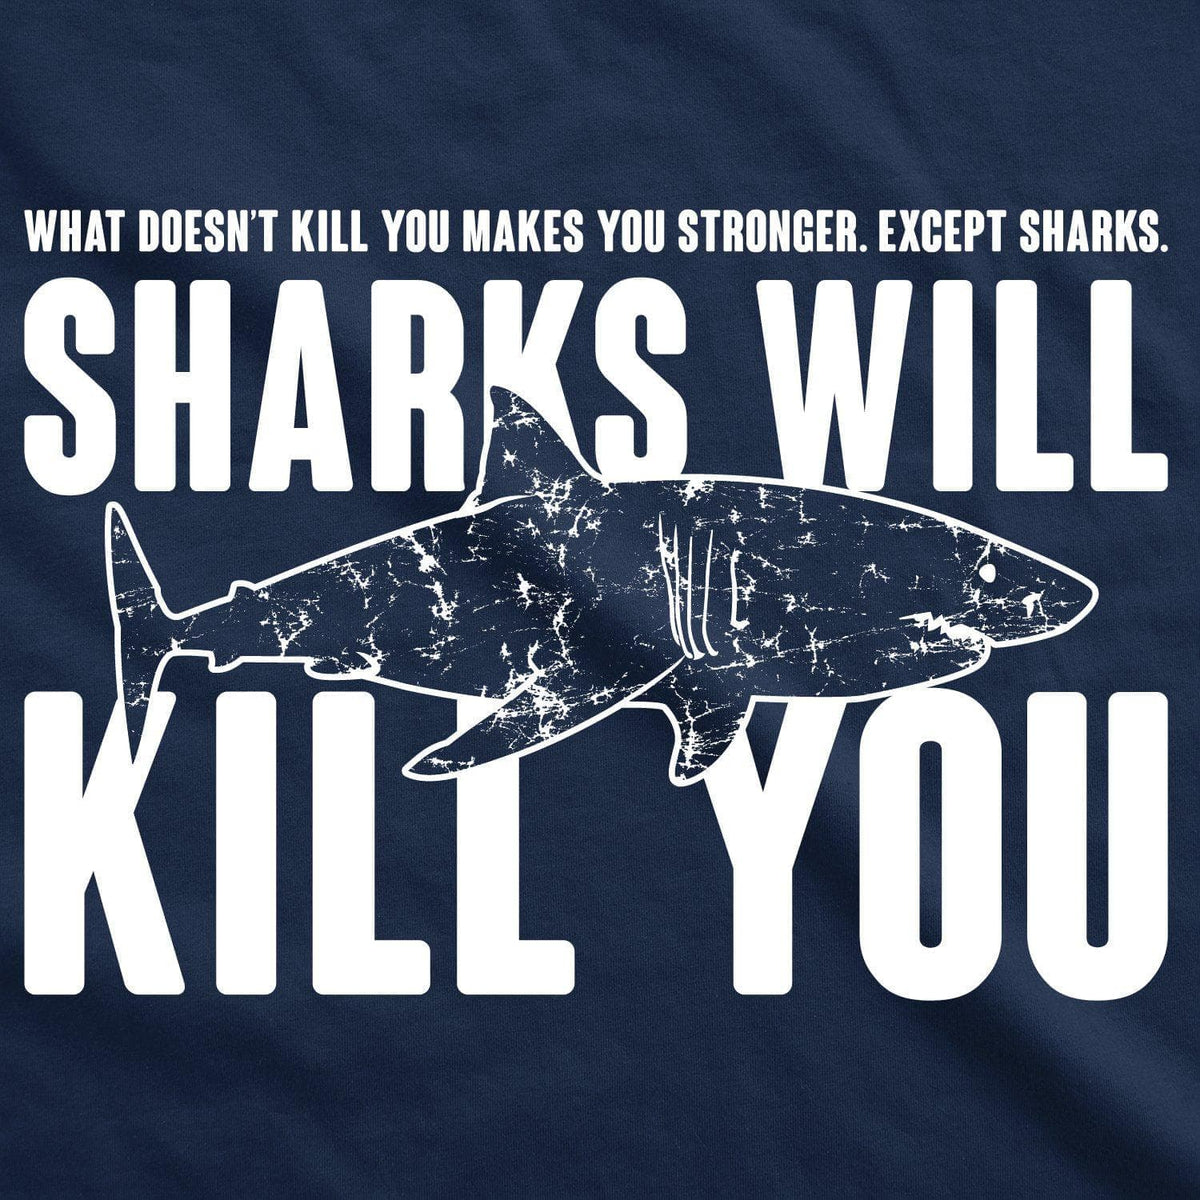 Sharks Will Kill You Youth Tshirt - Crazy Dog T-Shirts